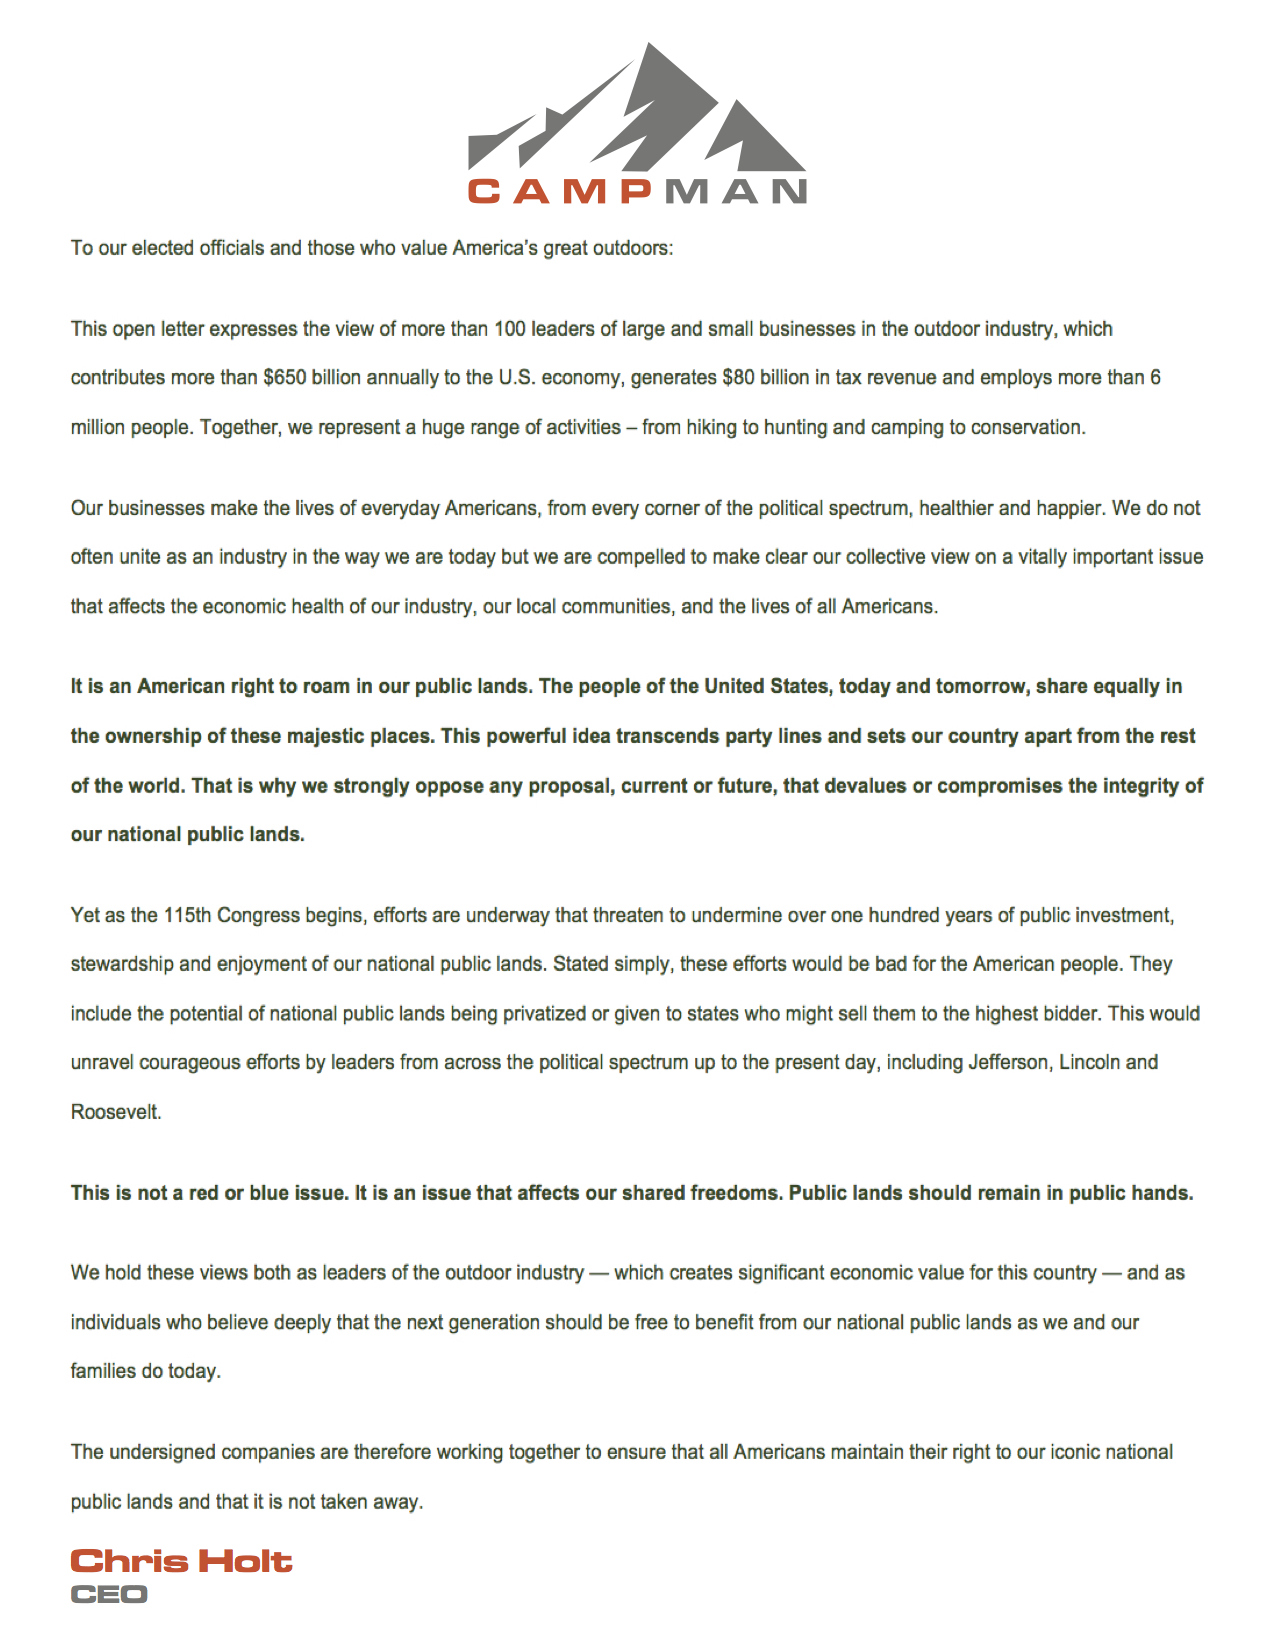 Campman's Open Letter to Elected Officials Regarding Public Lands